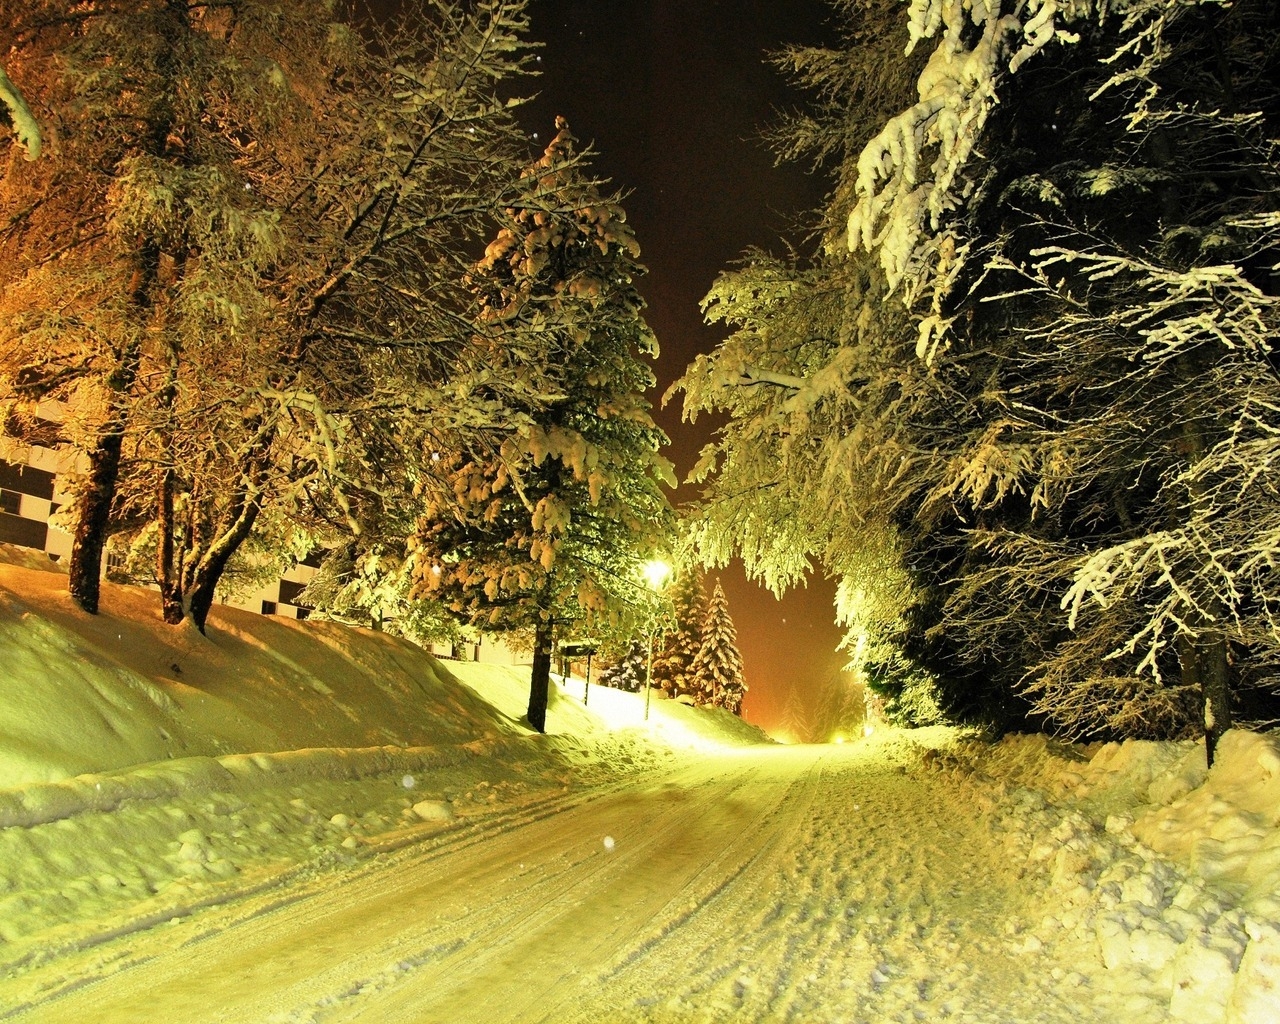 Winter Night for 1280 x 1024 resolution